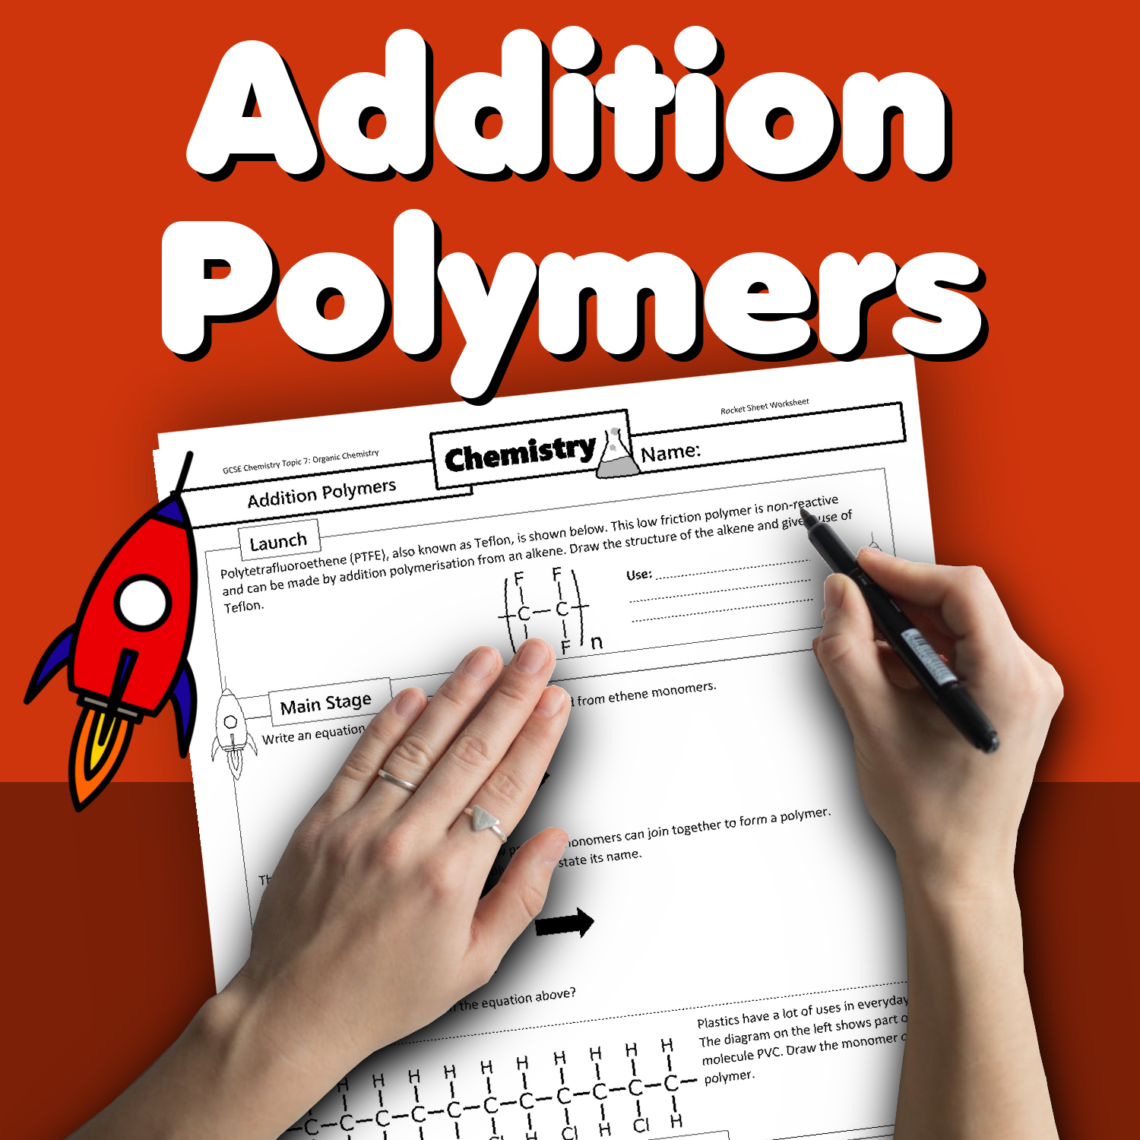 addition-polymers-home-learning-worksheet-gcse-rocketsheets-co-uk